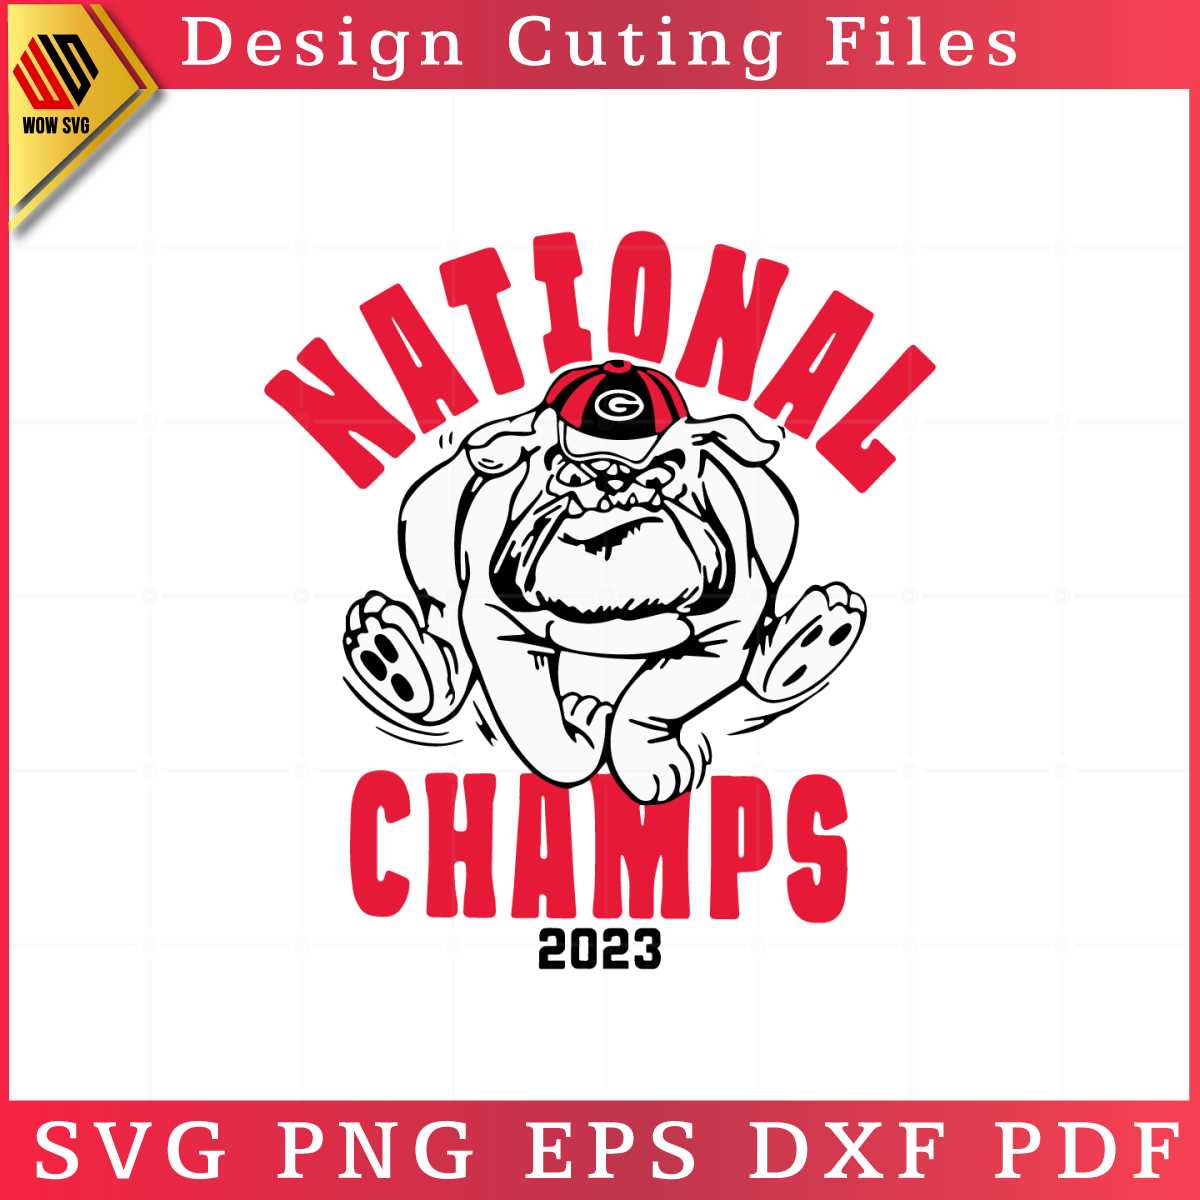 Georgia Bulldogs Logo 2023 Cfb National Championship Svg